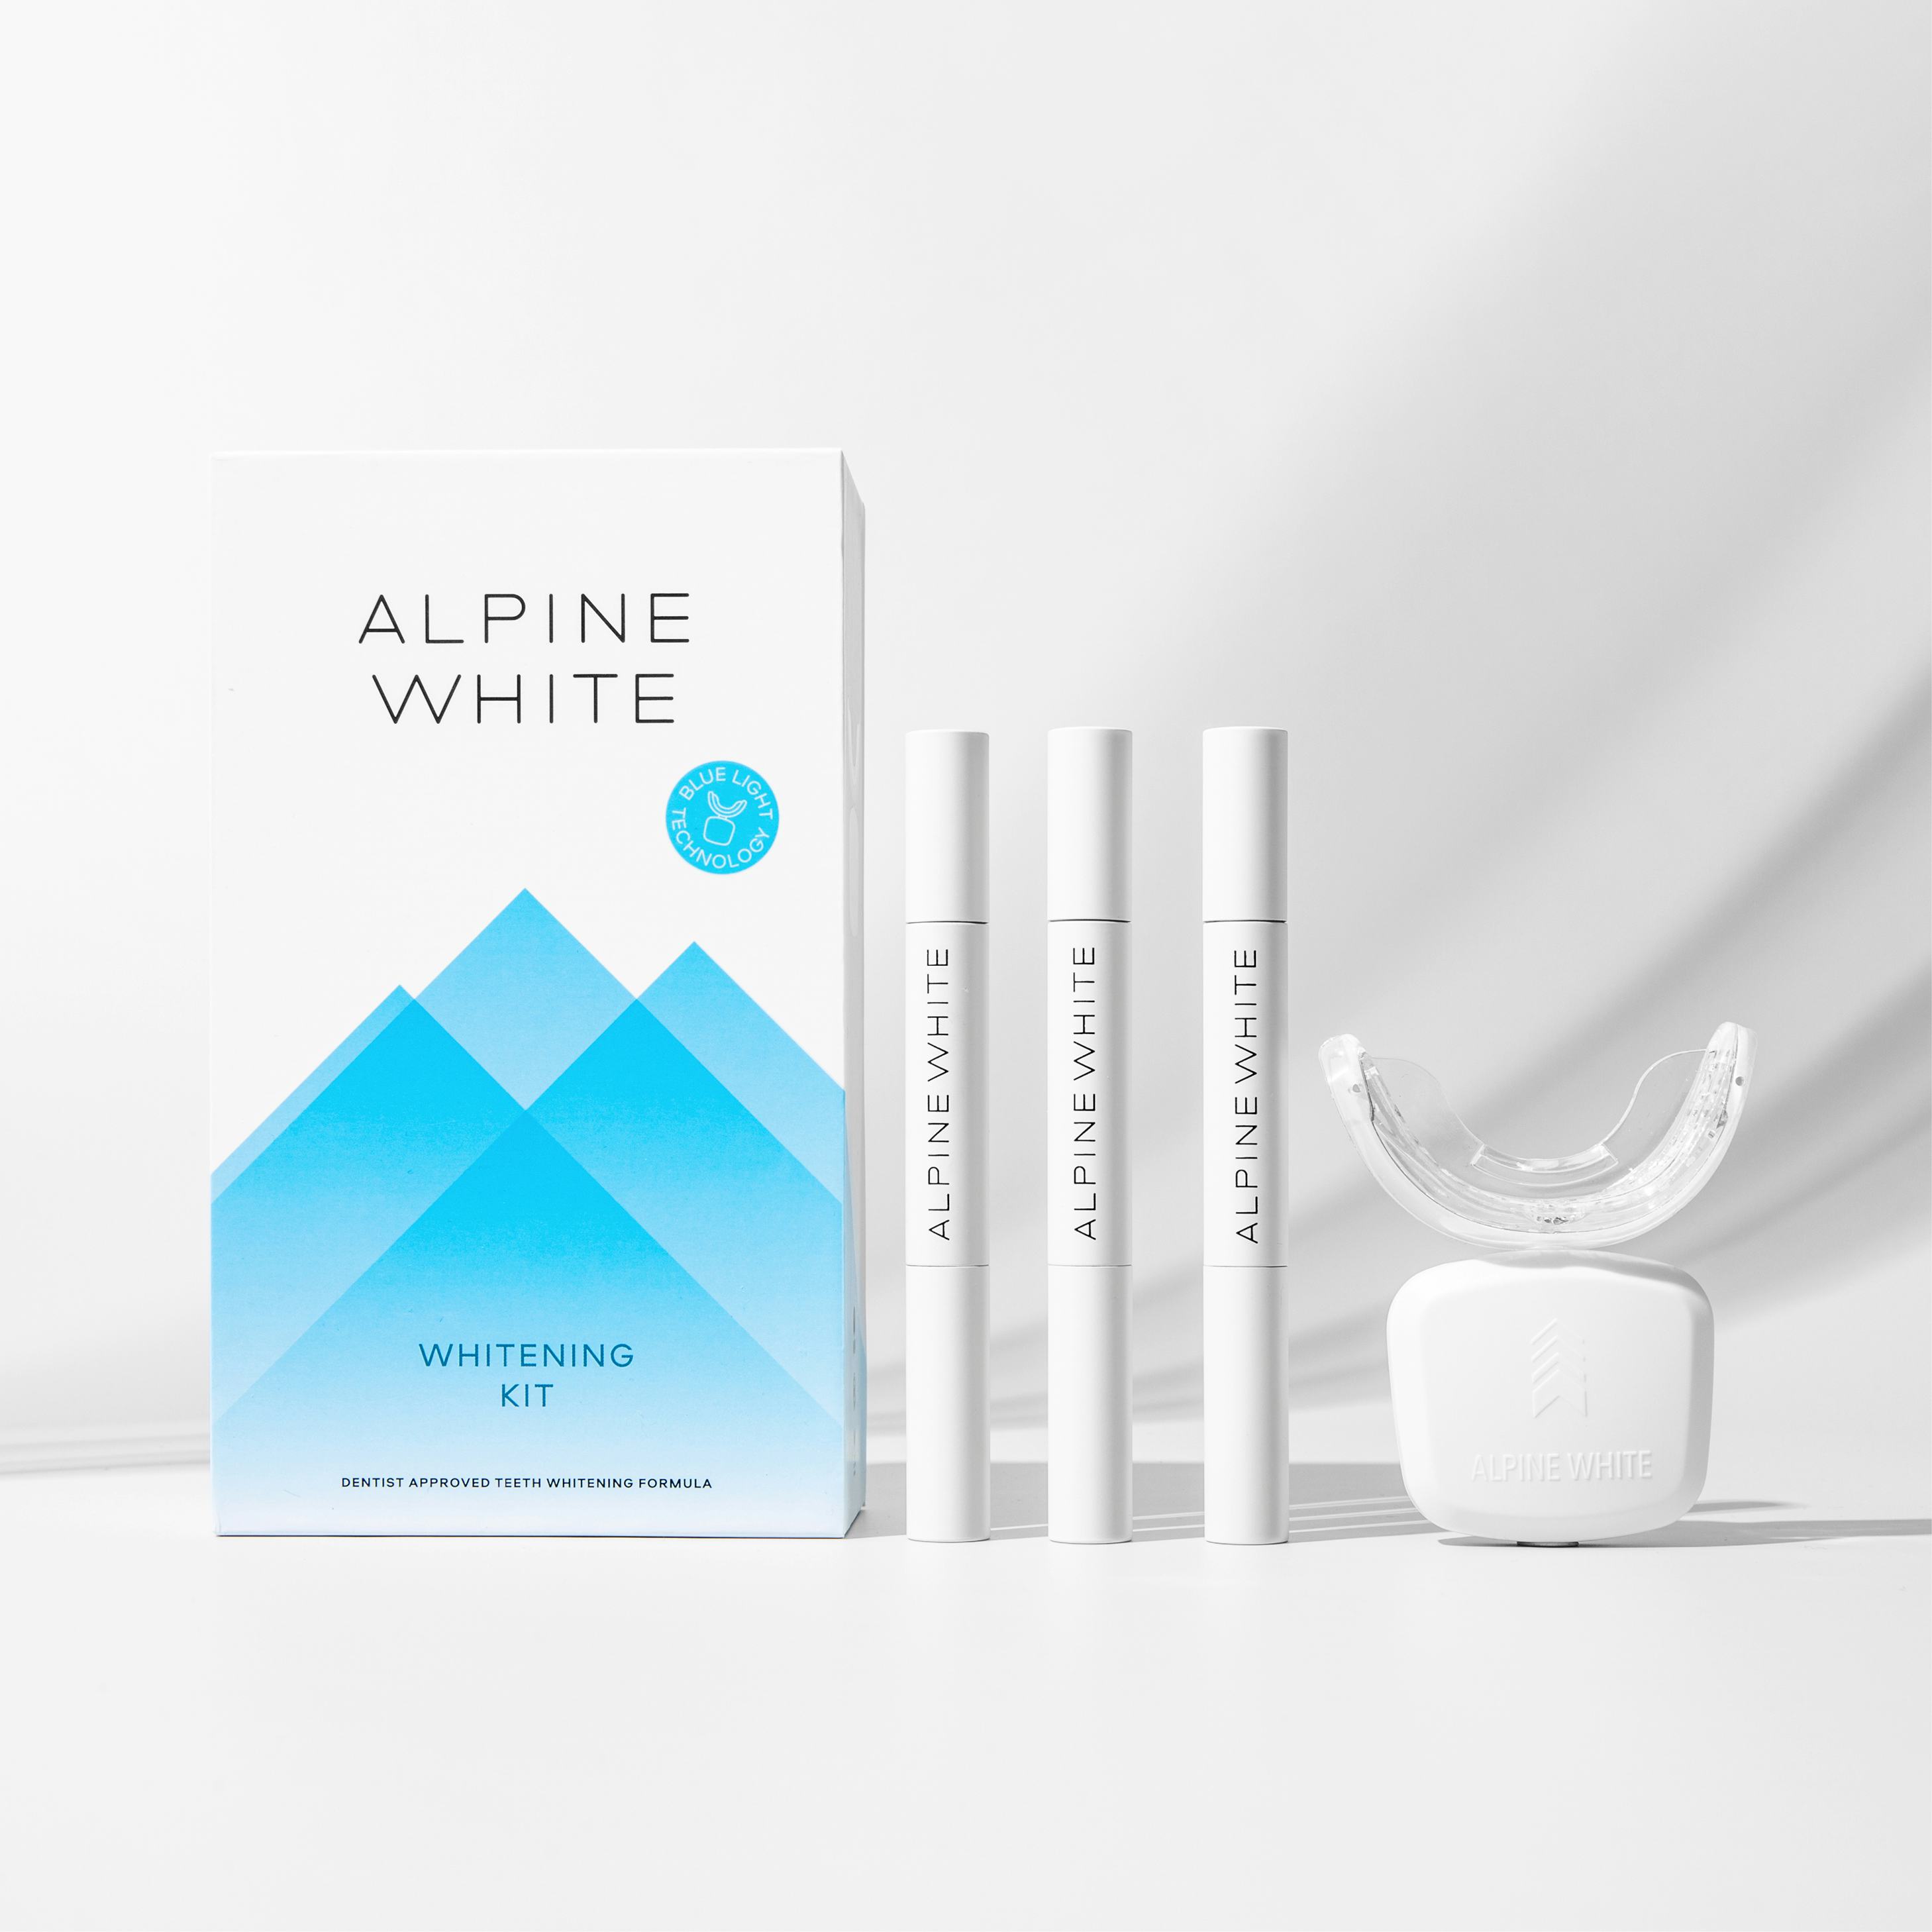 Alpine White Whitening Kit Productshot